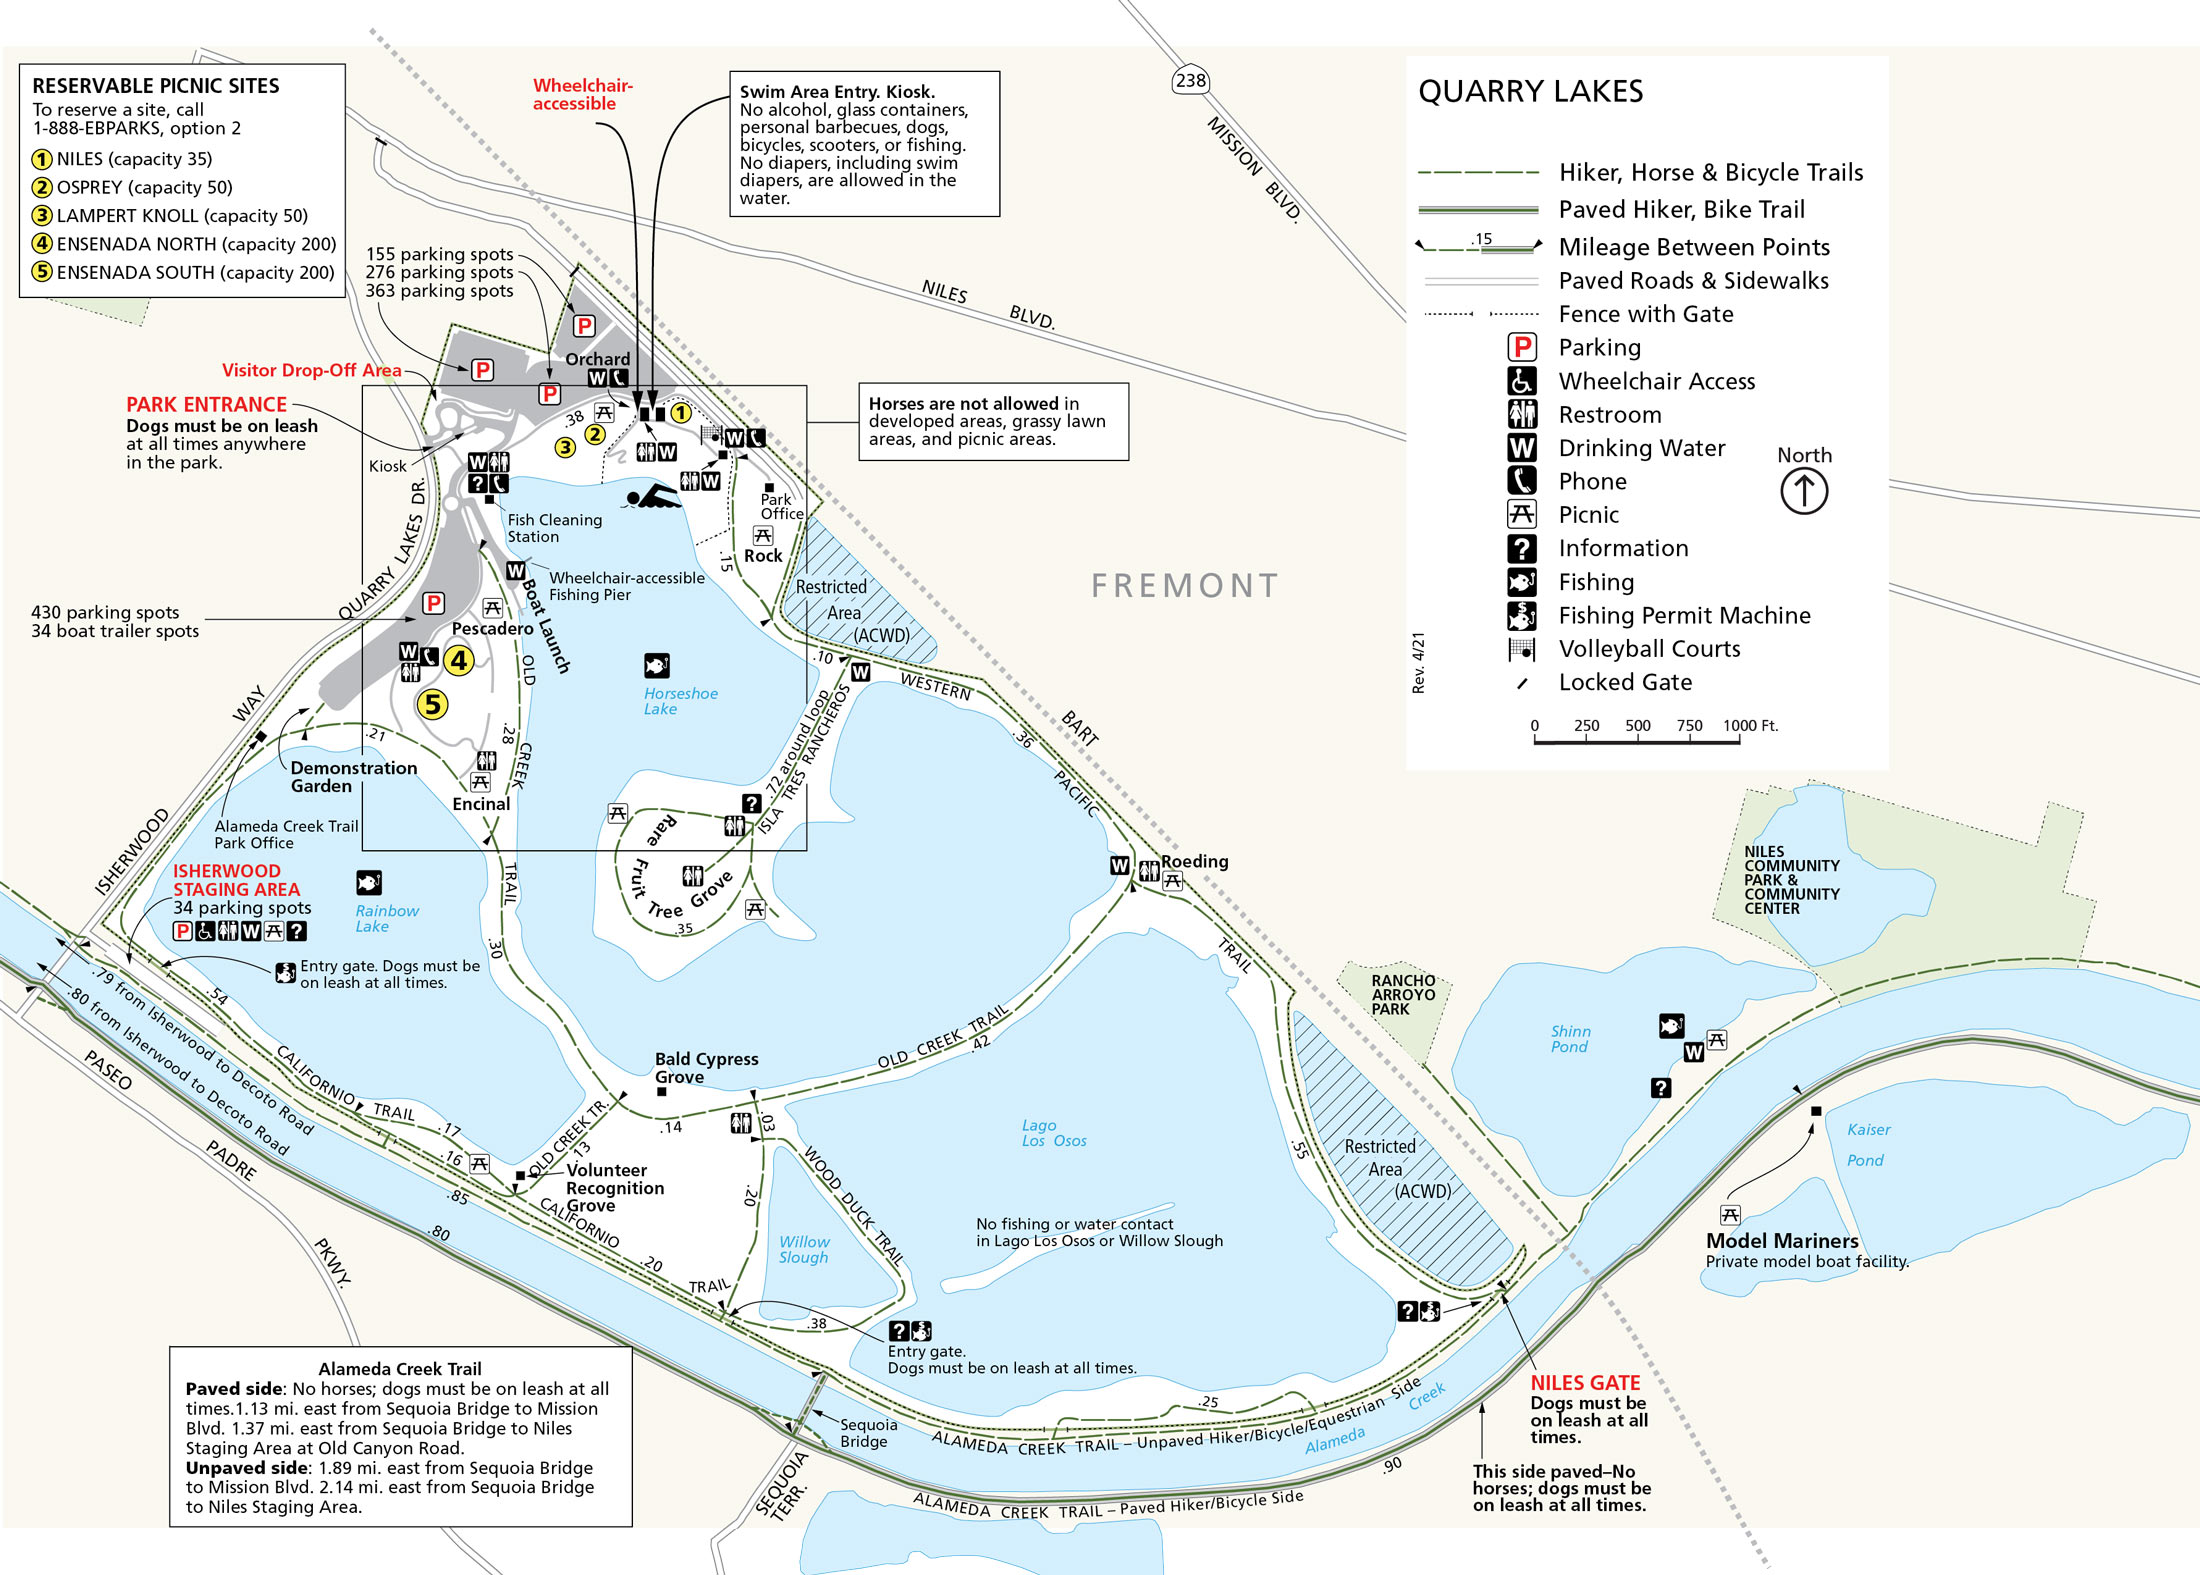 Map of Quarry Lakes Regional Recreation Area